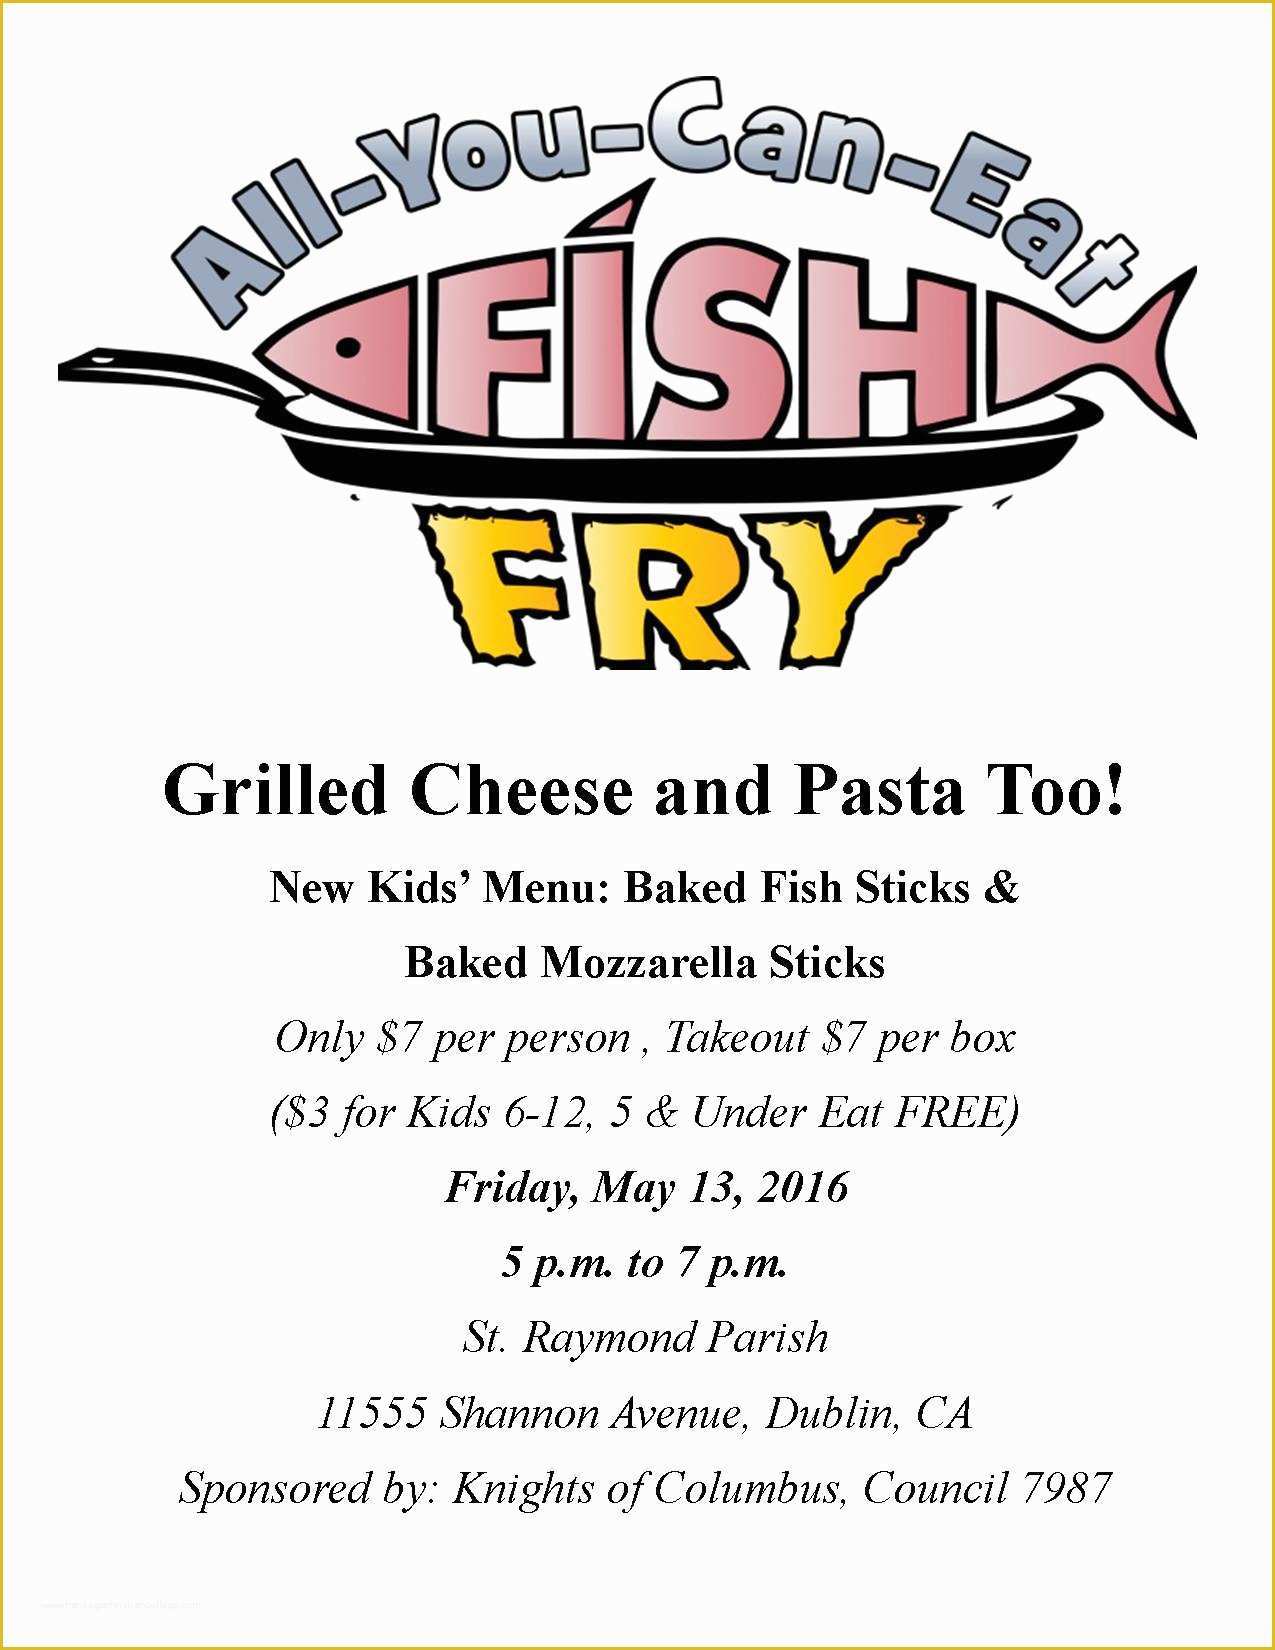 Free Fish Fry Flyer Template Of St Raymond Catholic Church – Next Fish Fry – May 13th 2016